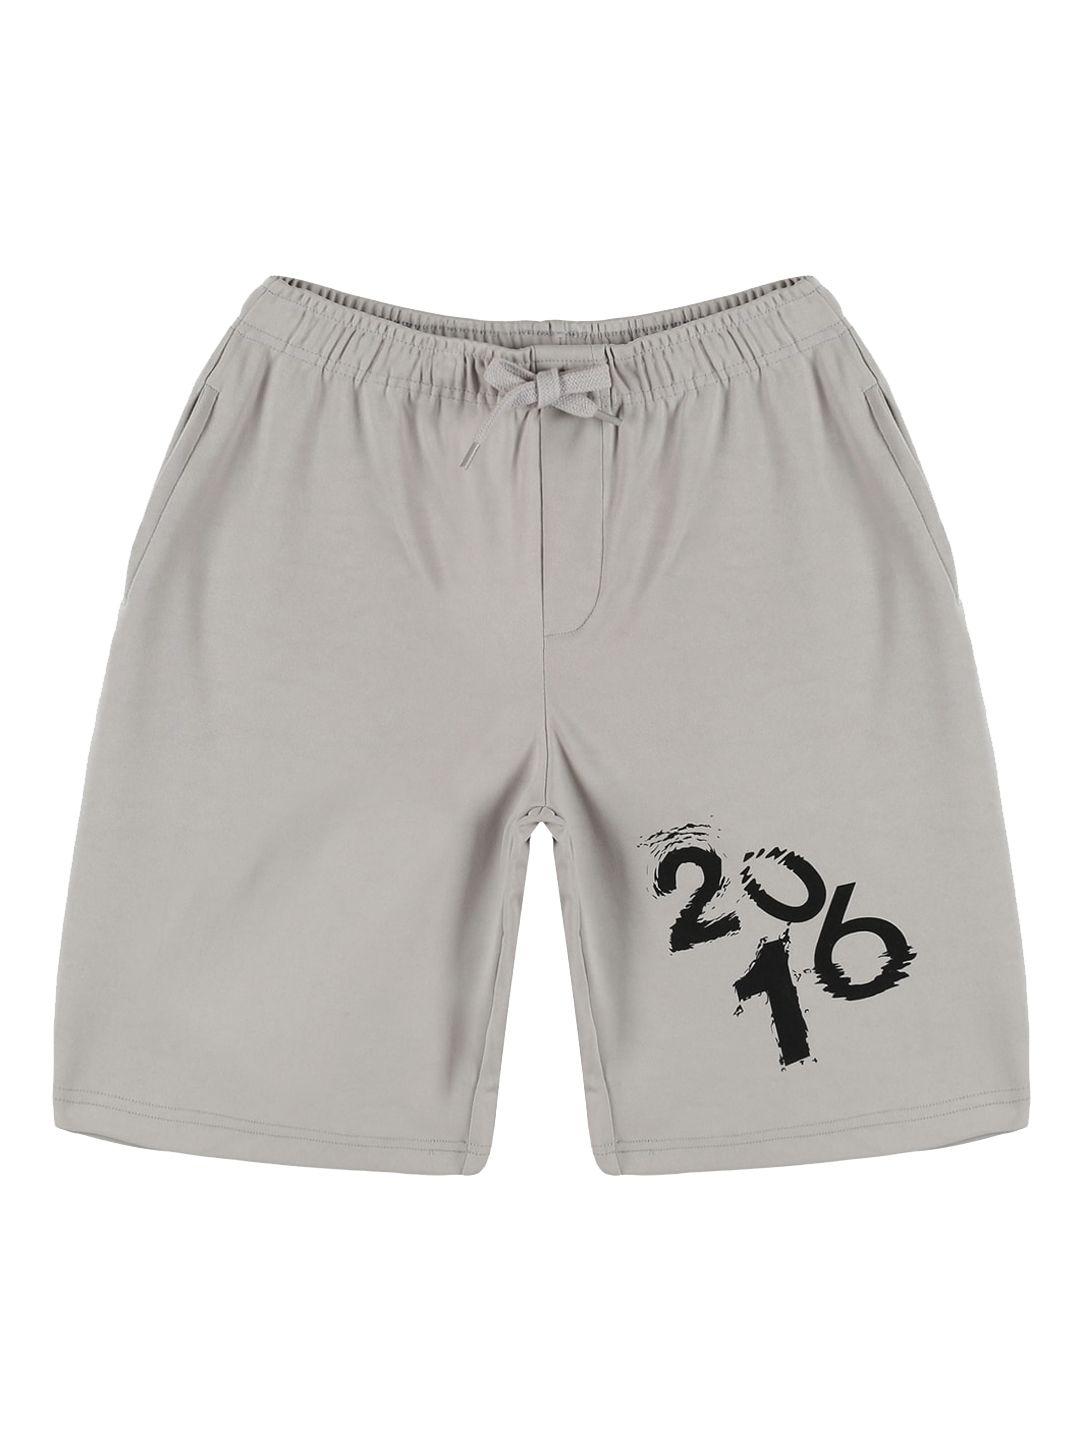 kiddopanti boys printed mid-rise swimming shorts